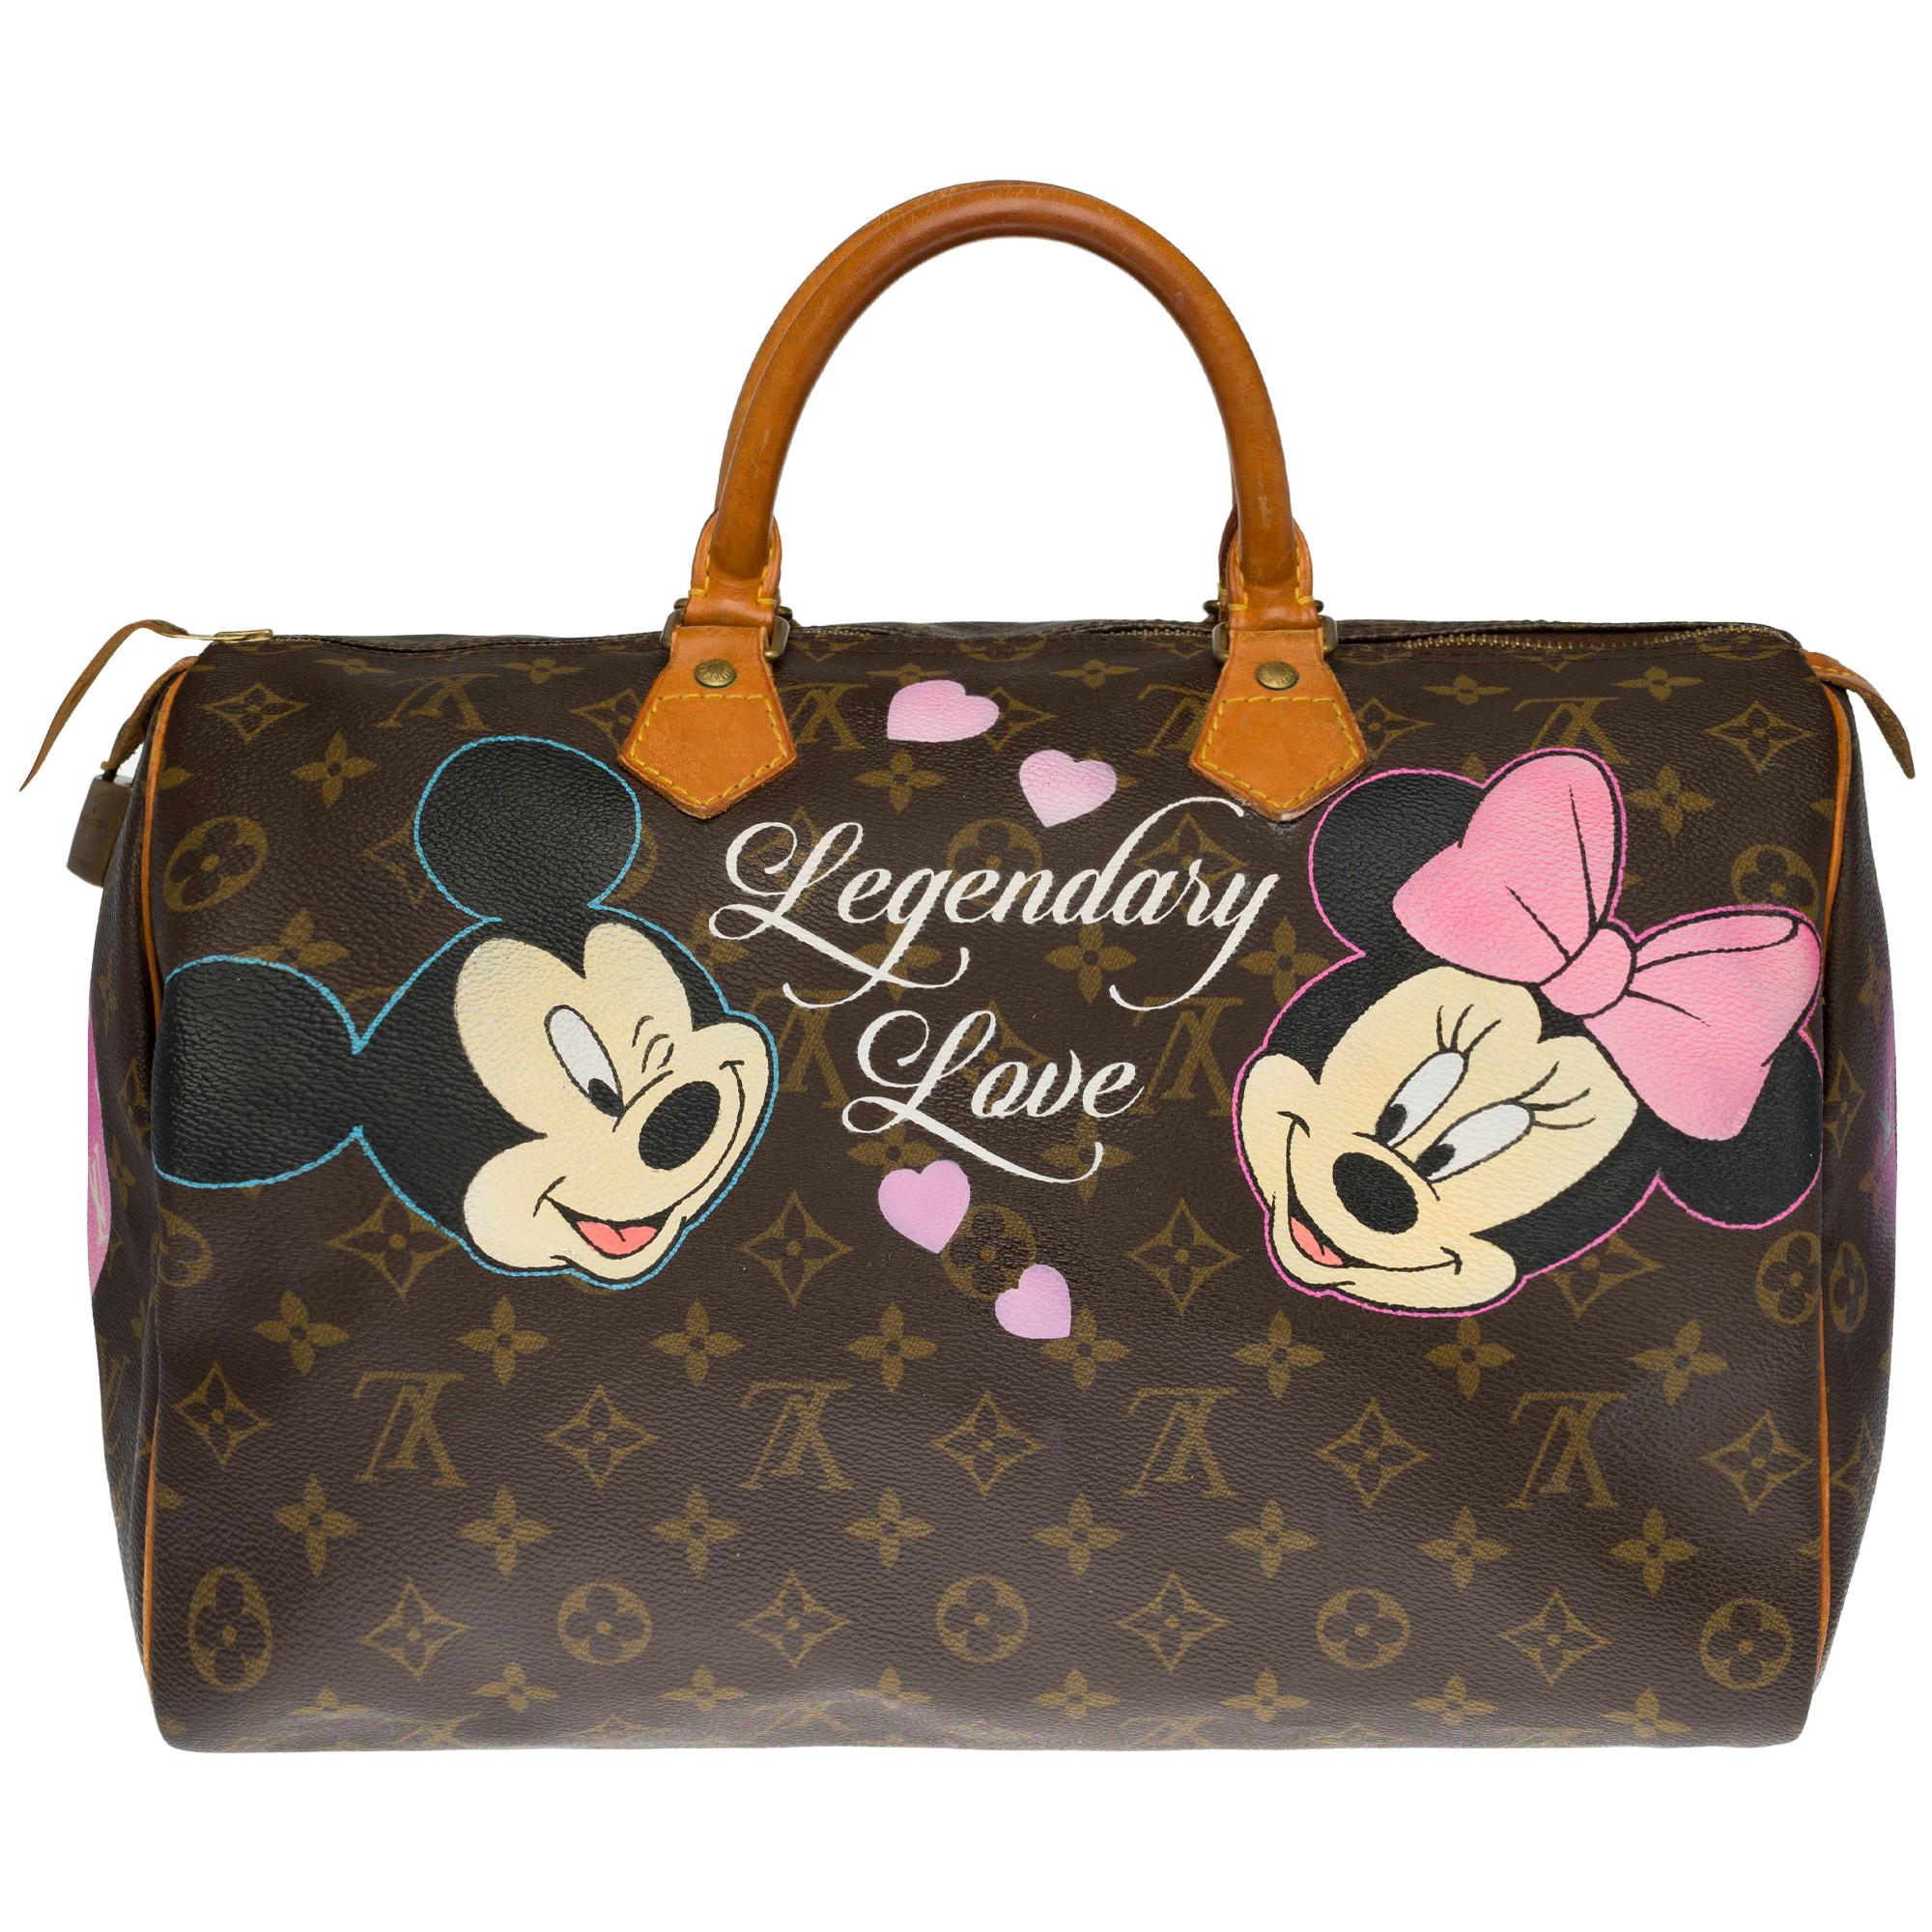 Customized Louis Vuitton Speedy 35 "Legendary Love" handbag in Monogram canvas For Sale